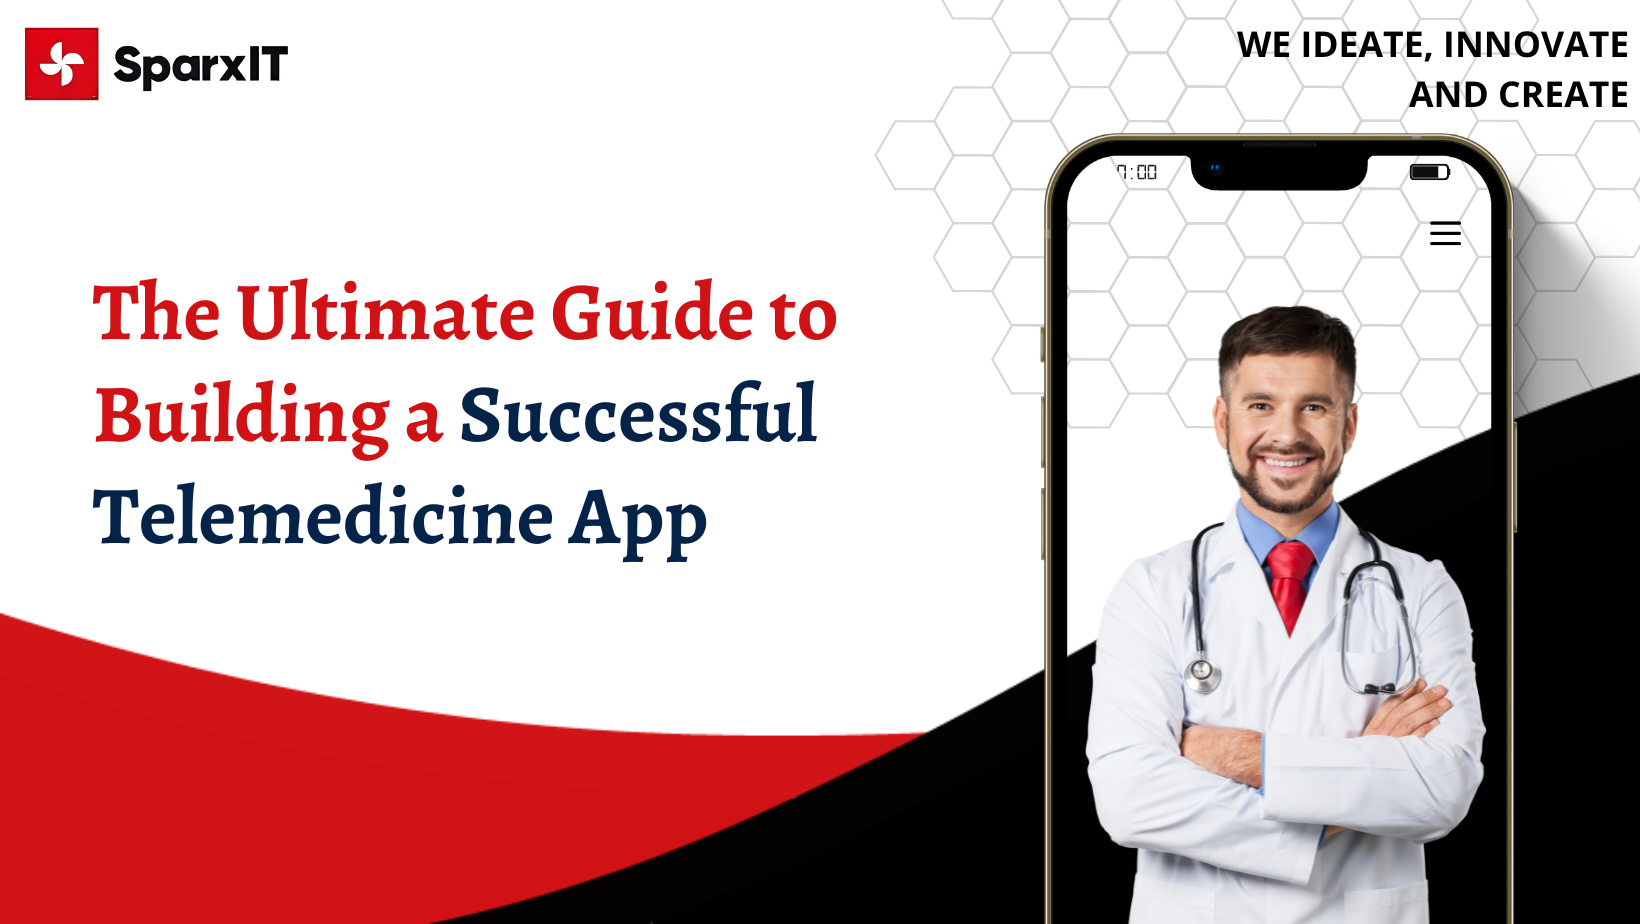 The Ultimate Guide to Building a Successful Telemedicine App